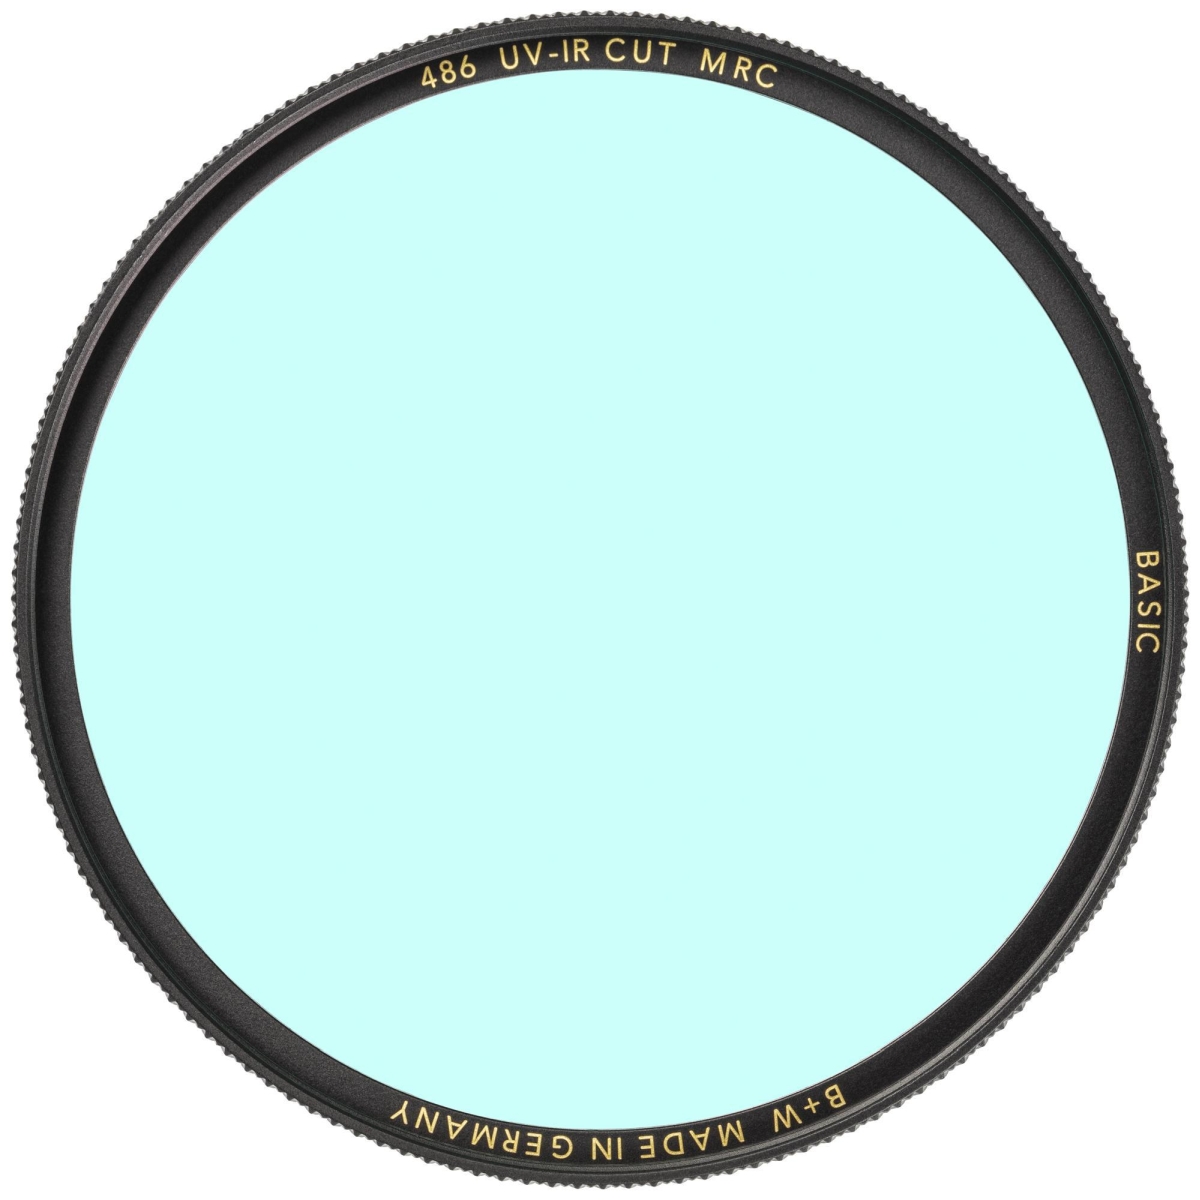 B+W UV-IR Cut 40,5 mm MRC Basic